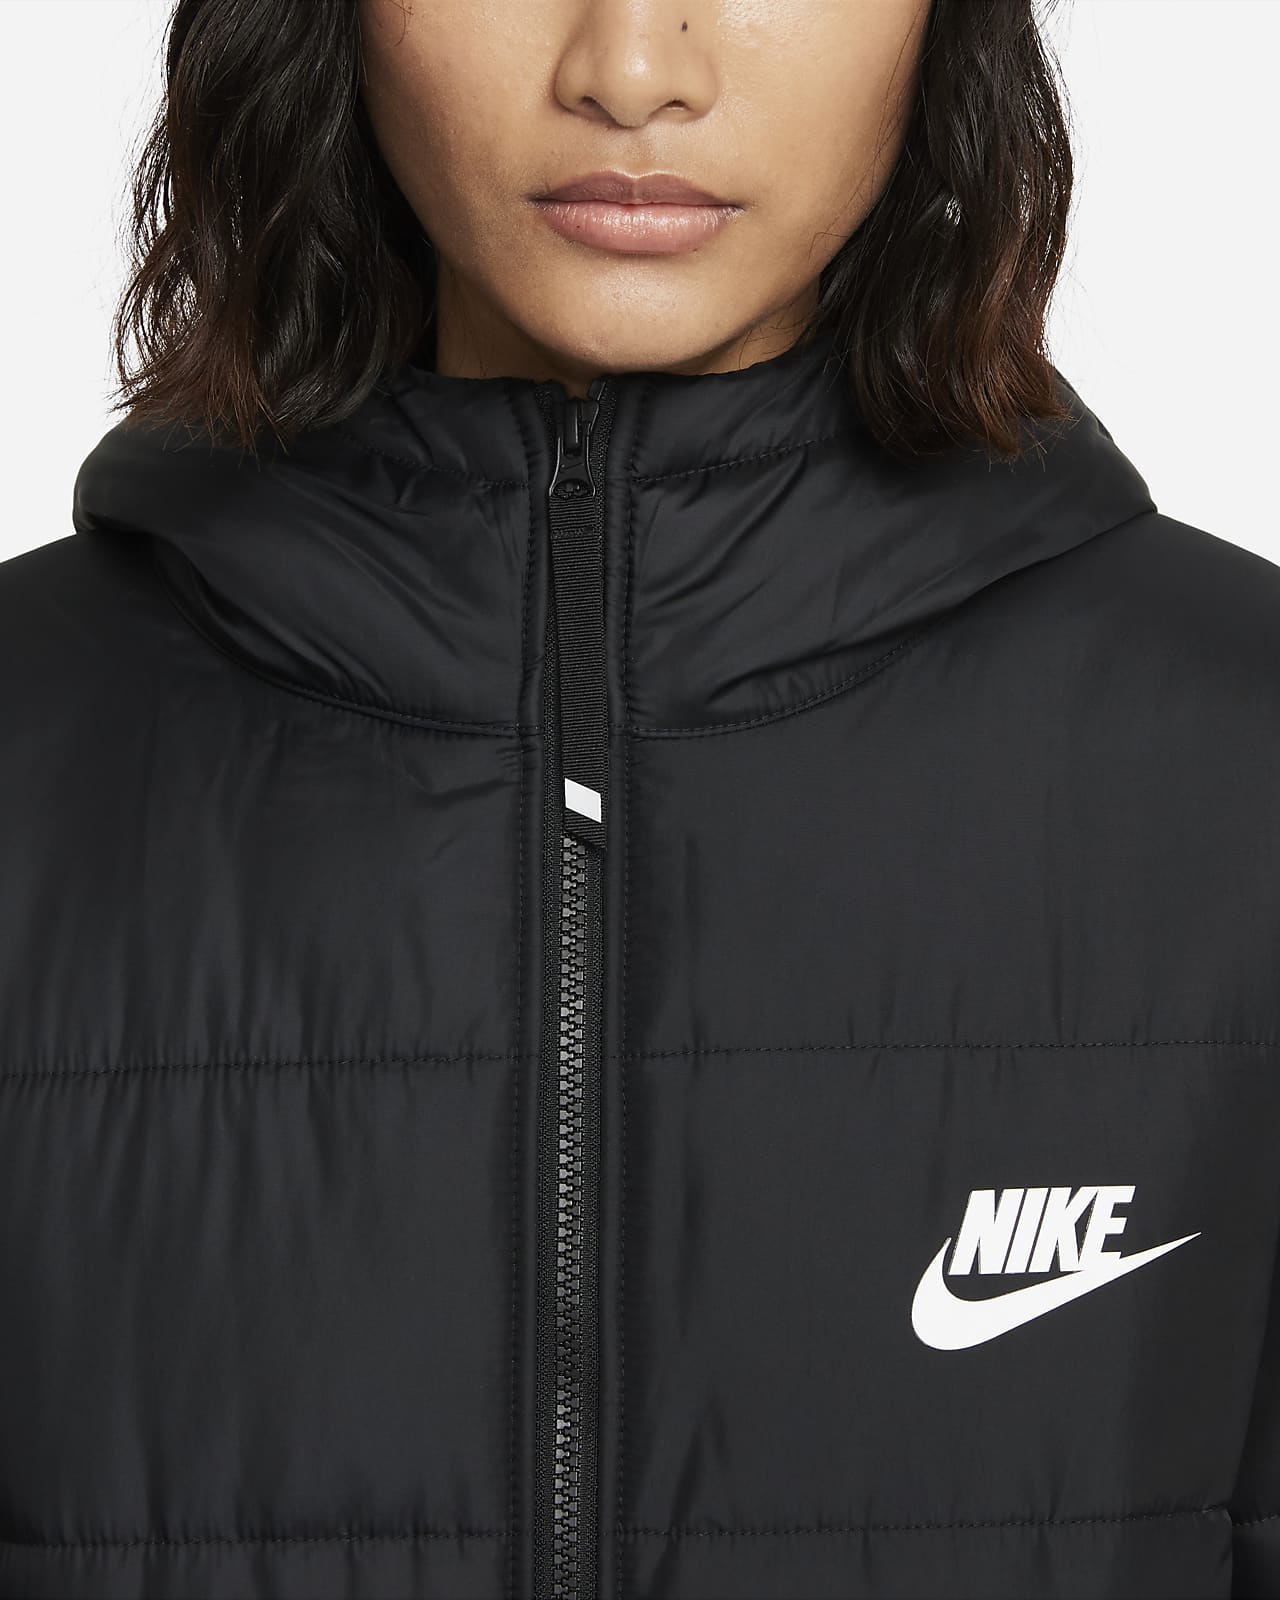 Manteau d'hiver Nike Sportswear Therma-FIT Parka